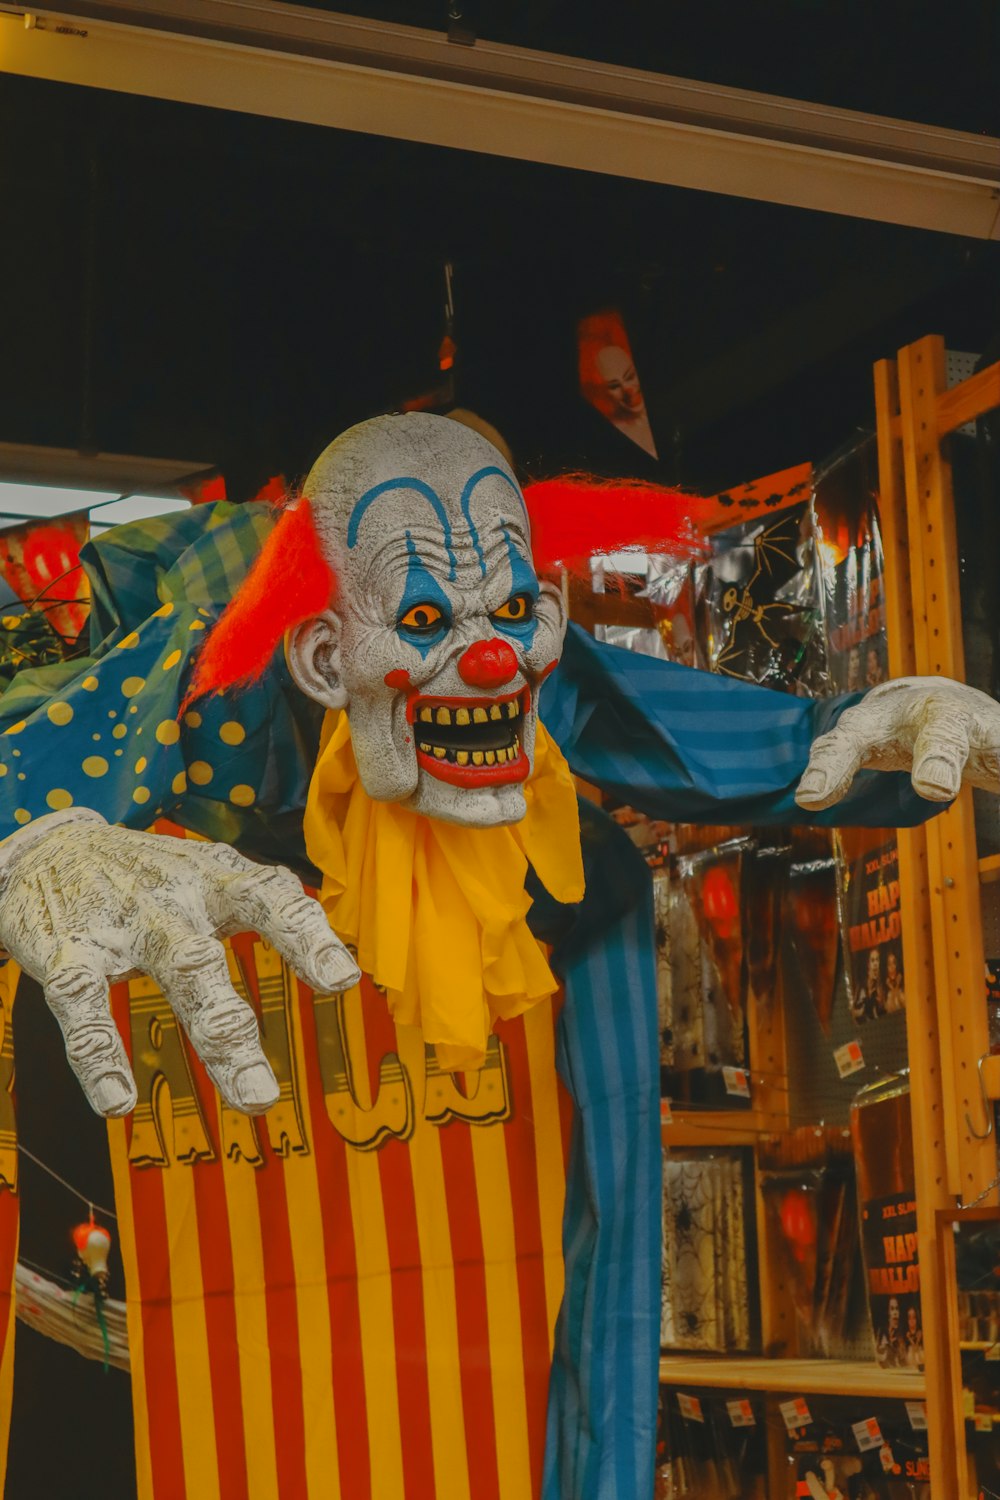 a creepy clown holding a chair in a store